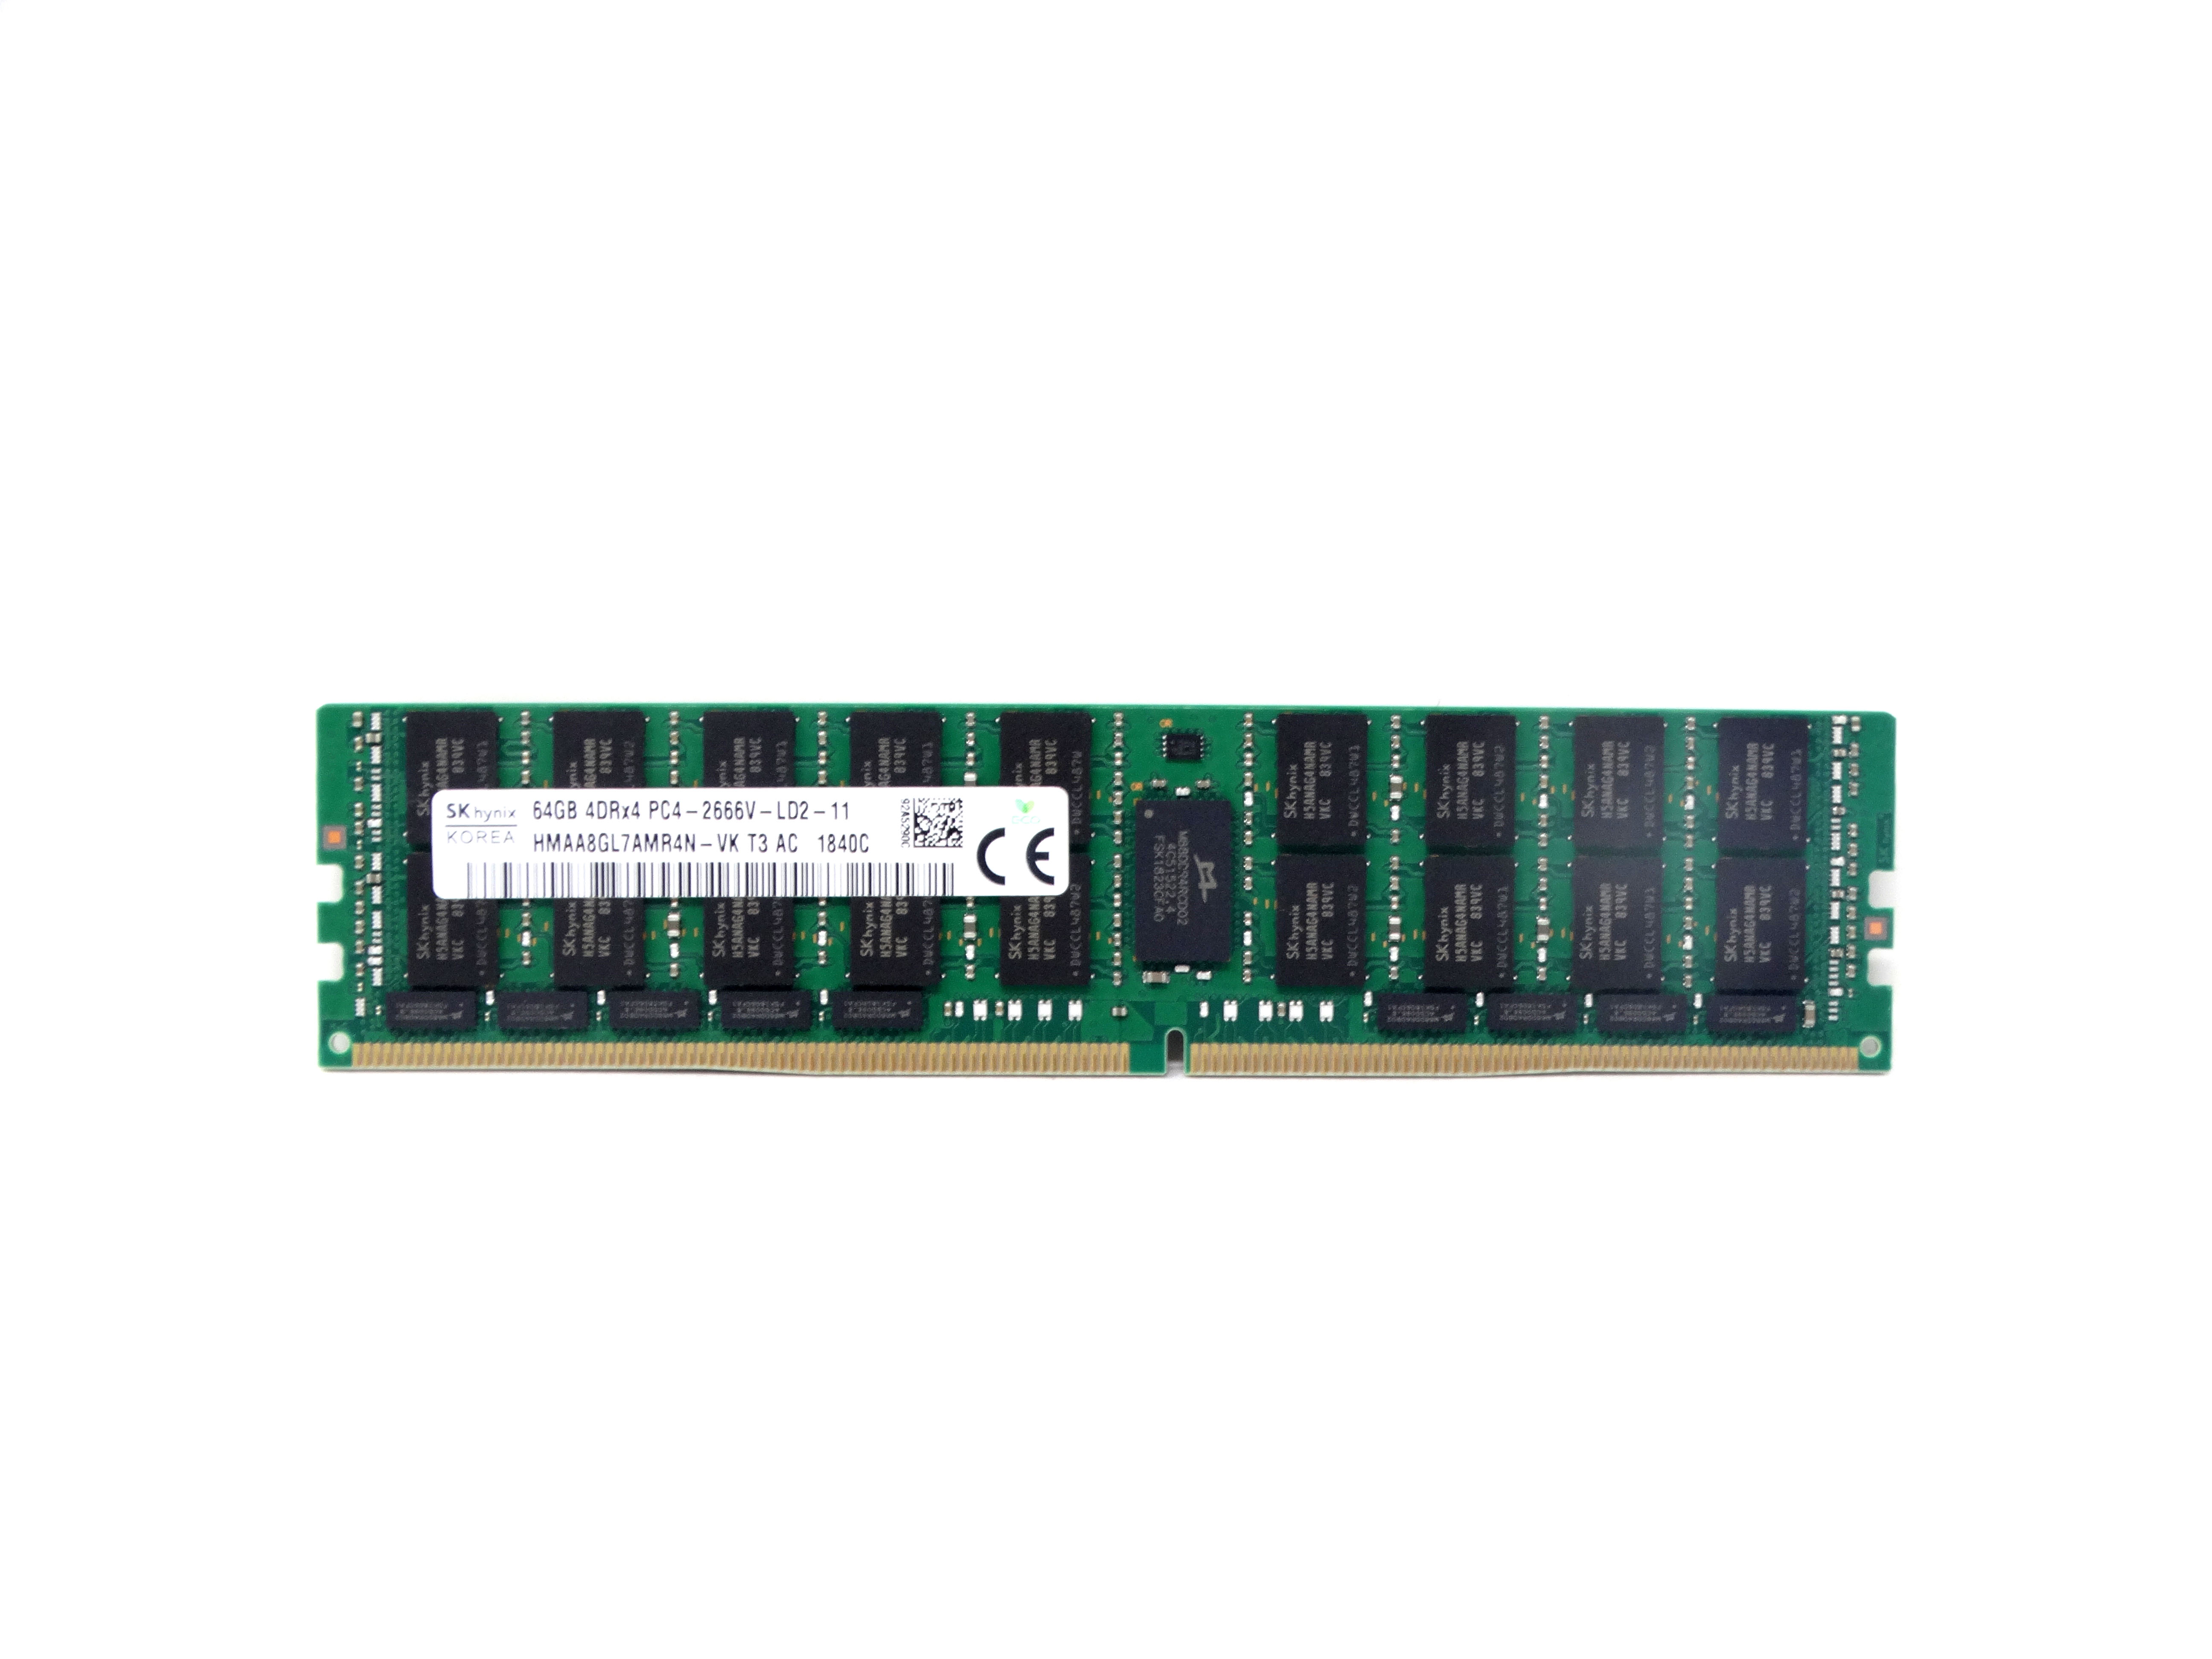 Hynix 64GB 4DRx4 PC4-2666V DDR4 ECC Registered Memory (HMAA8GL7AMR4N-VK)